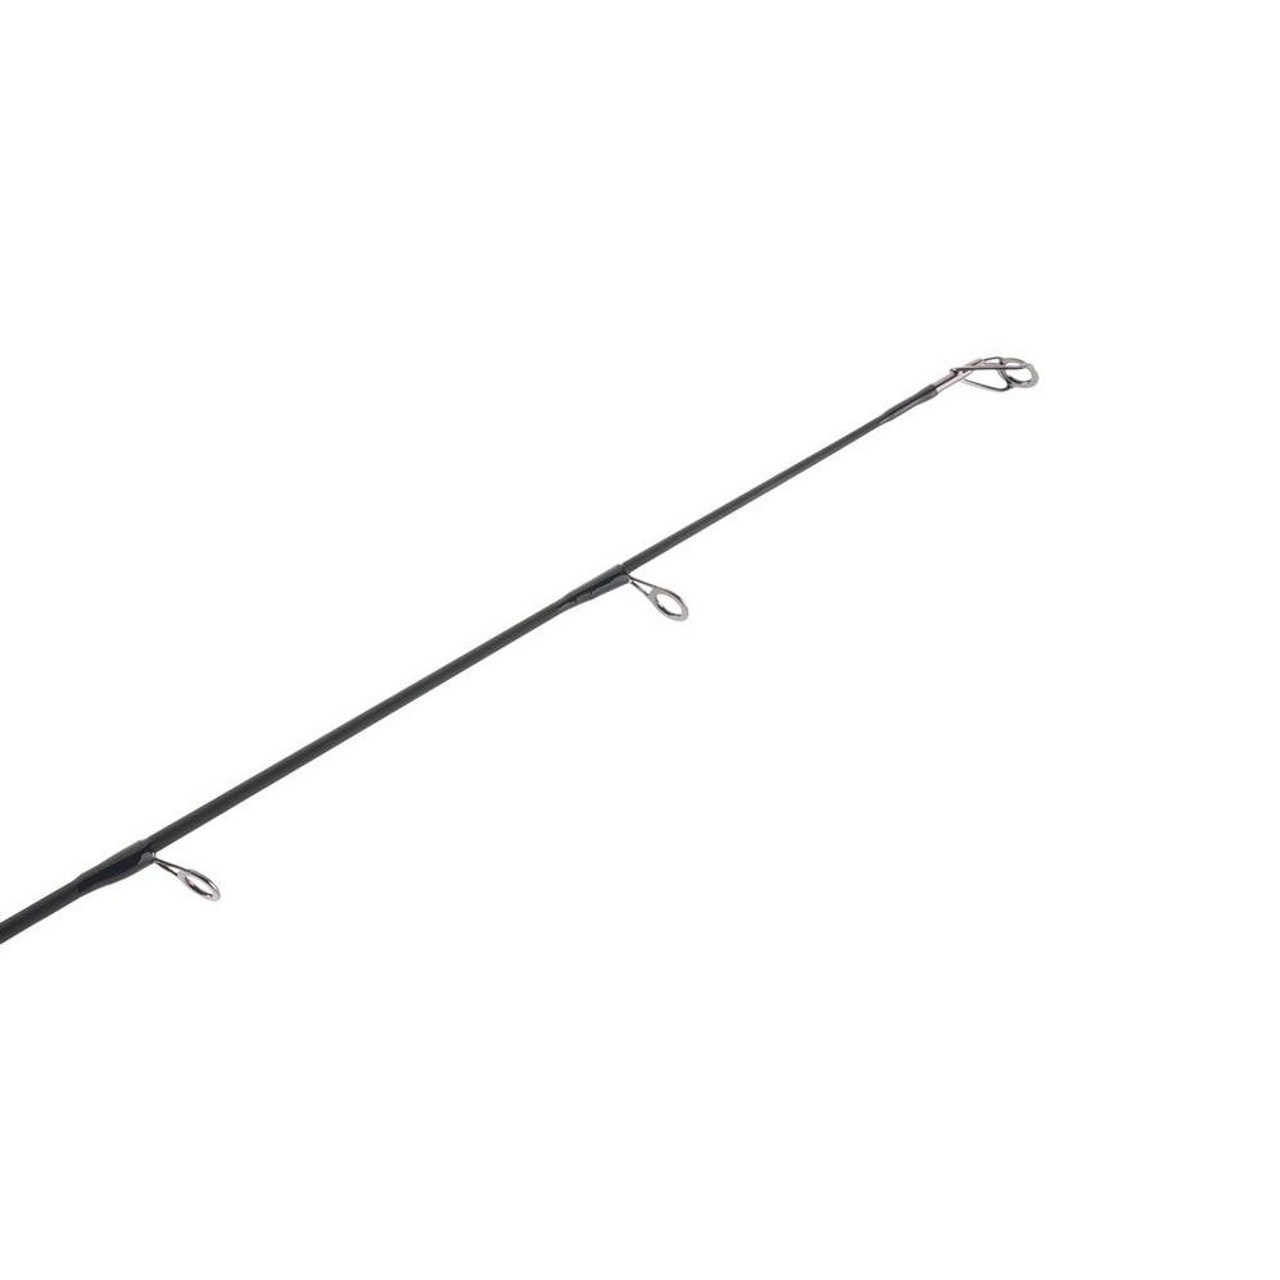 PENN Saltwater Fishing Rod-Reel Spinning Combo FIERCE IV 75-150g 5000 CMB